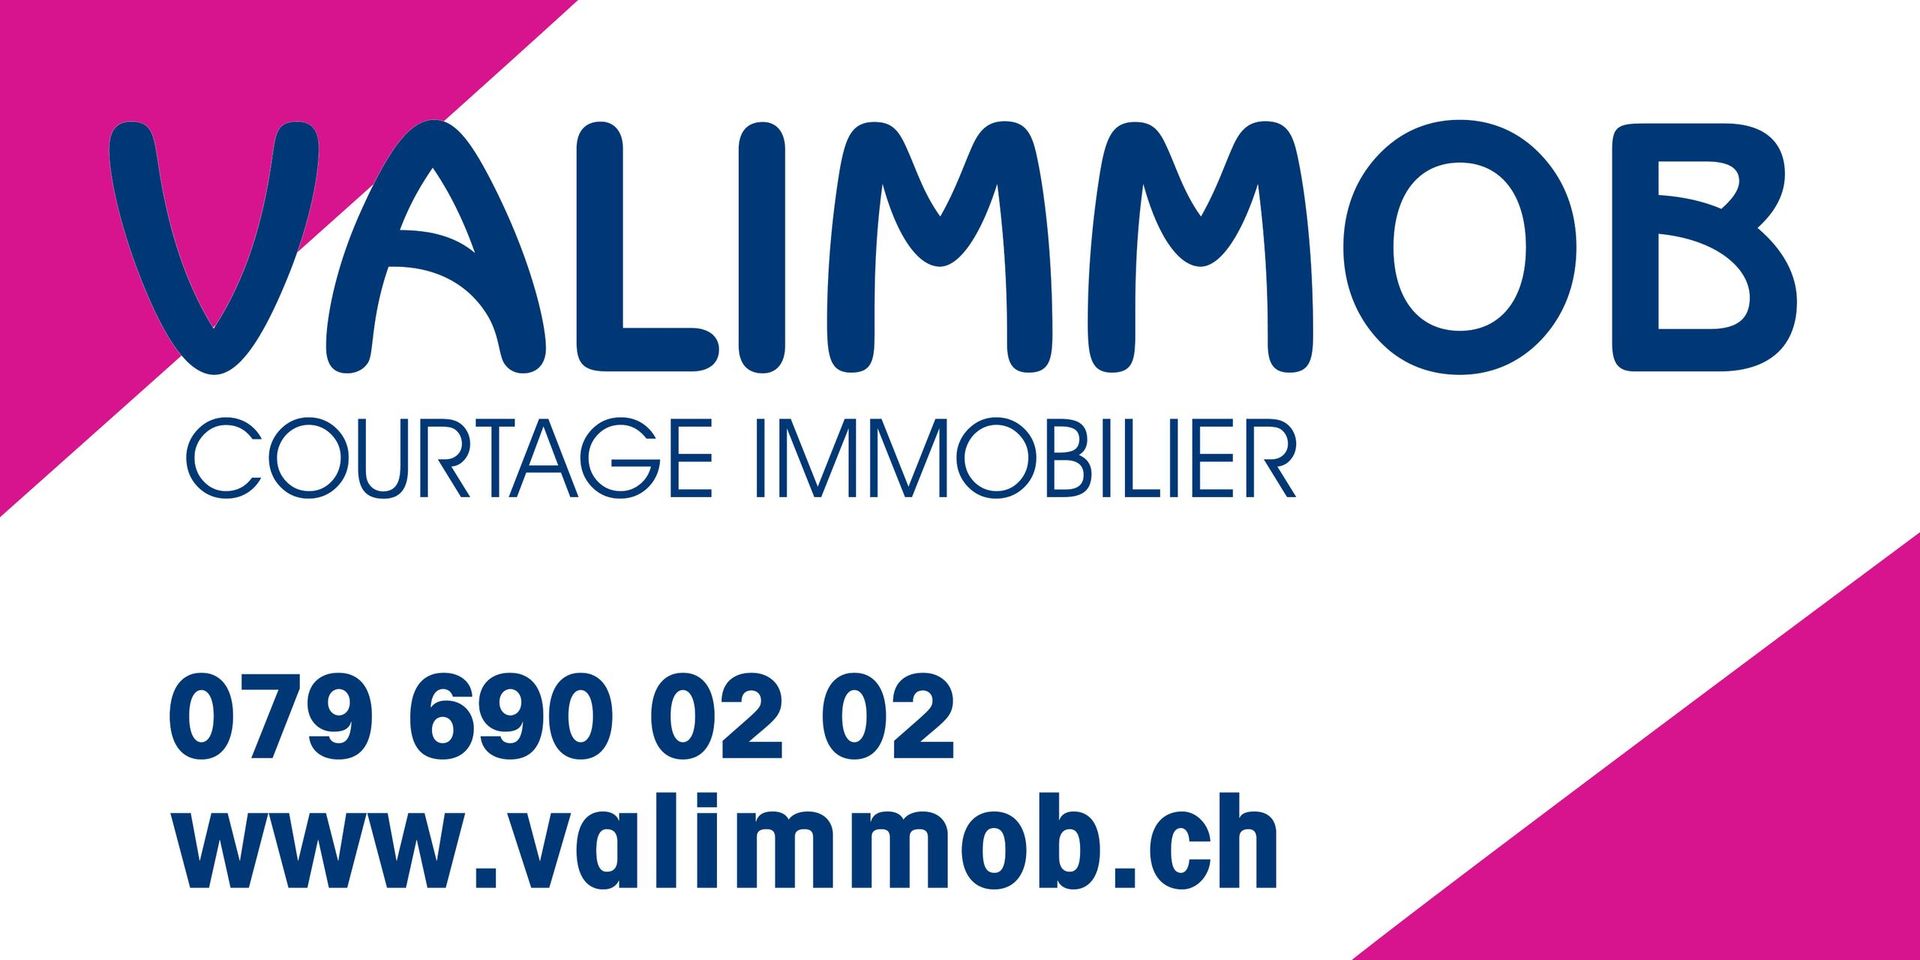 (c) Valimmob.ch